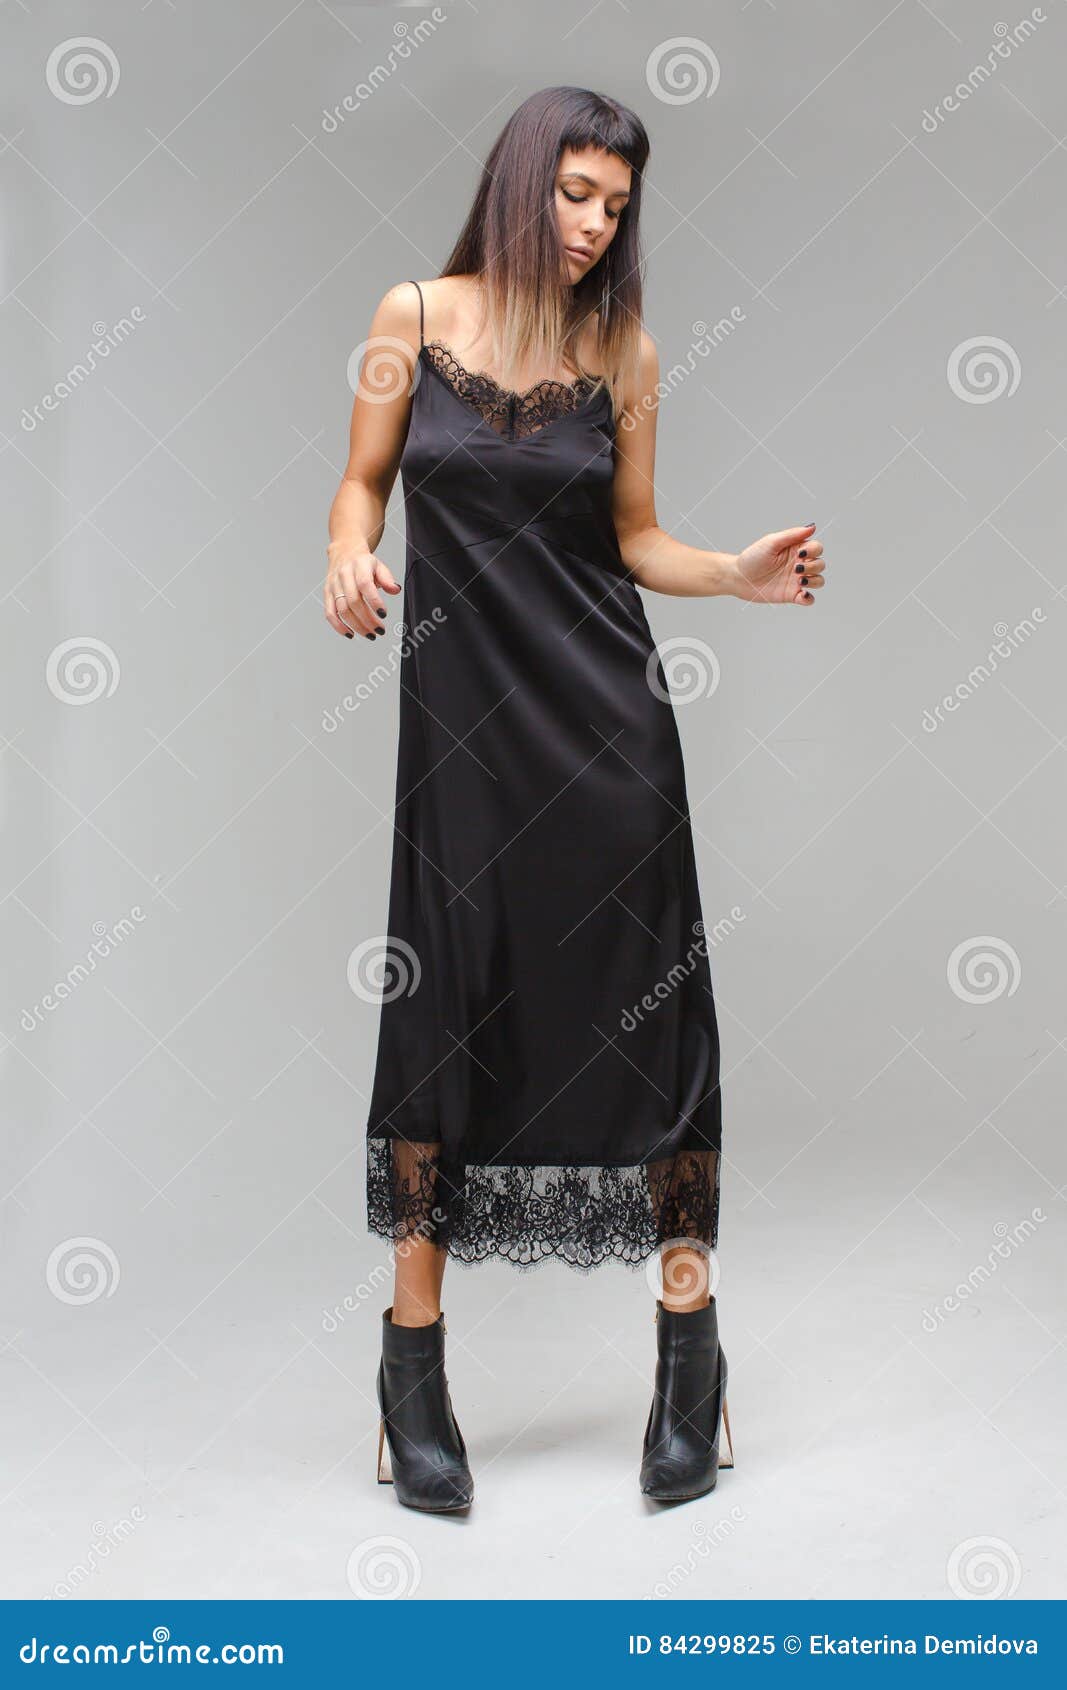 In Black Dress Nightie Underwear Lace Stock Image - Image of